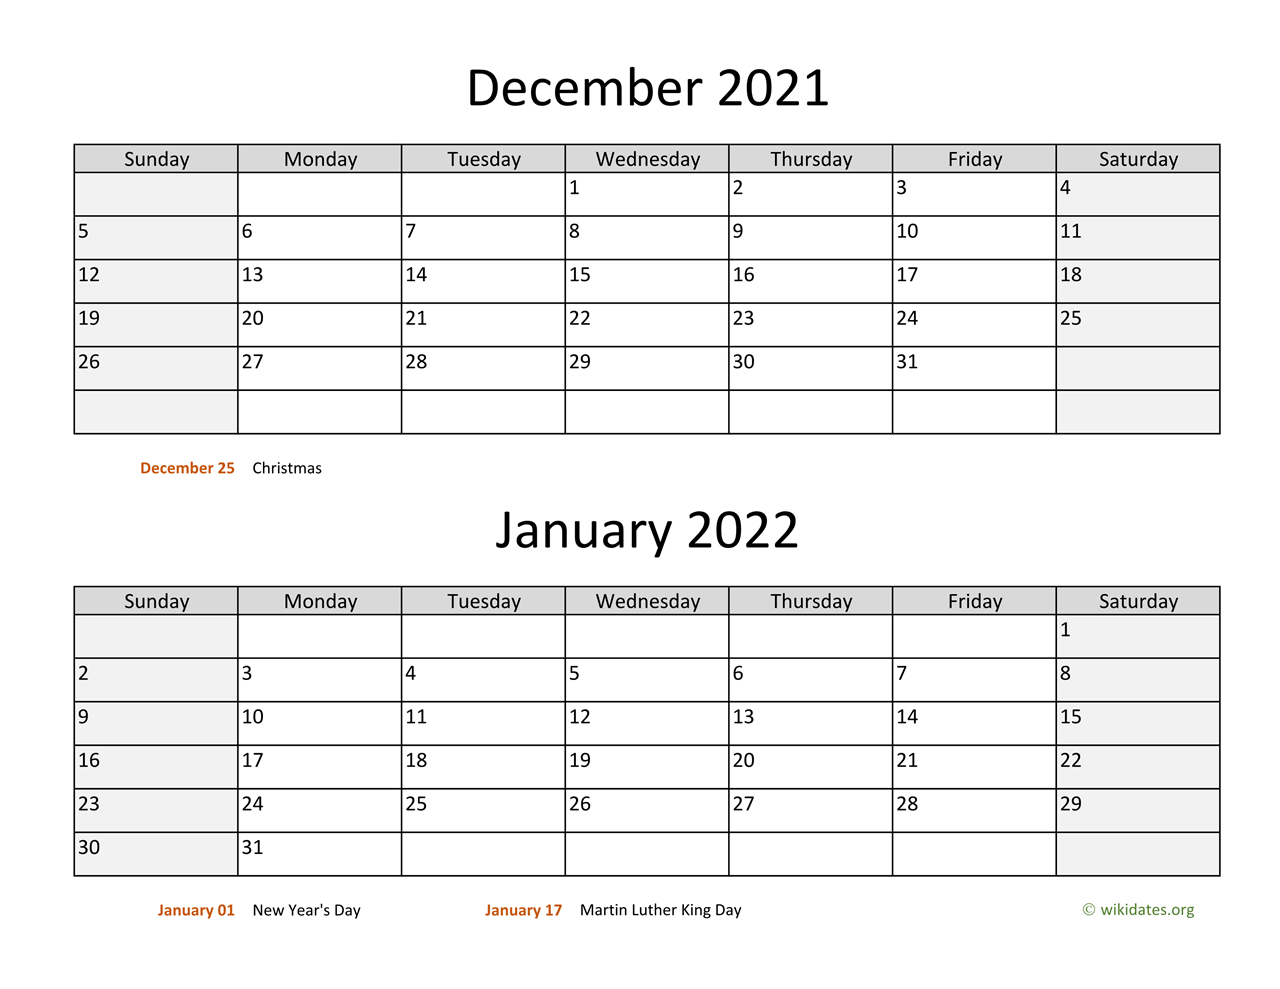 Dec 2021 And Jan 2022 Calendar December 2021 And January 2022 Calendar | Wikidates.org